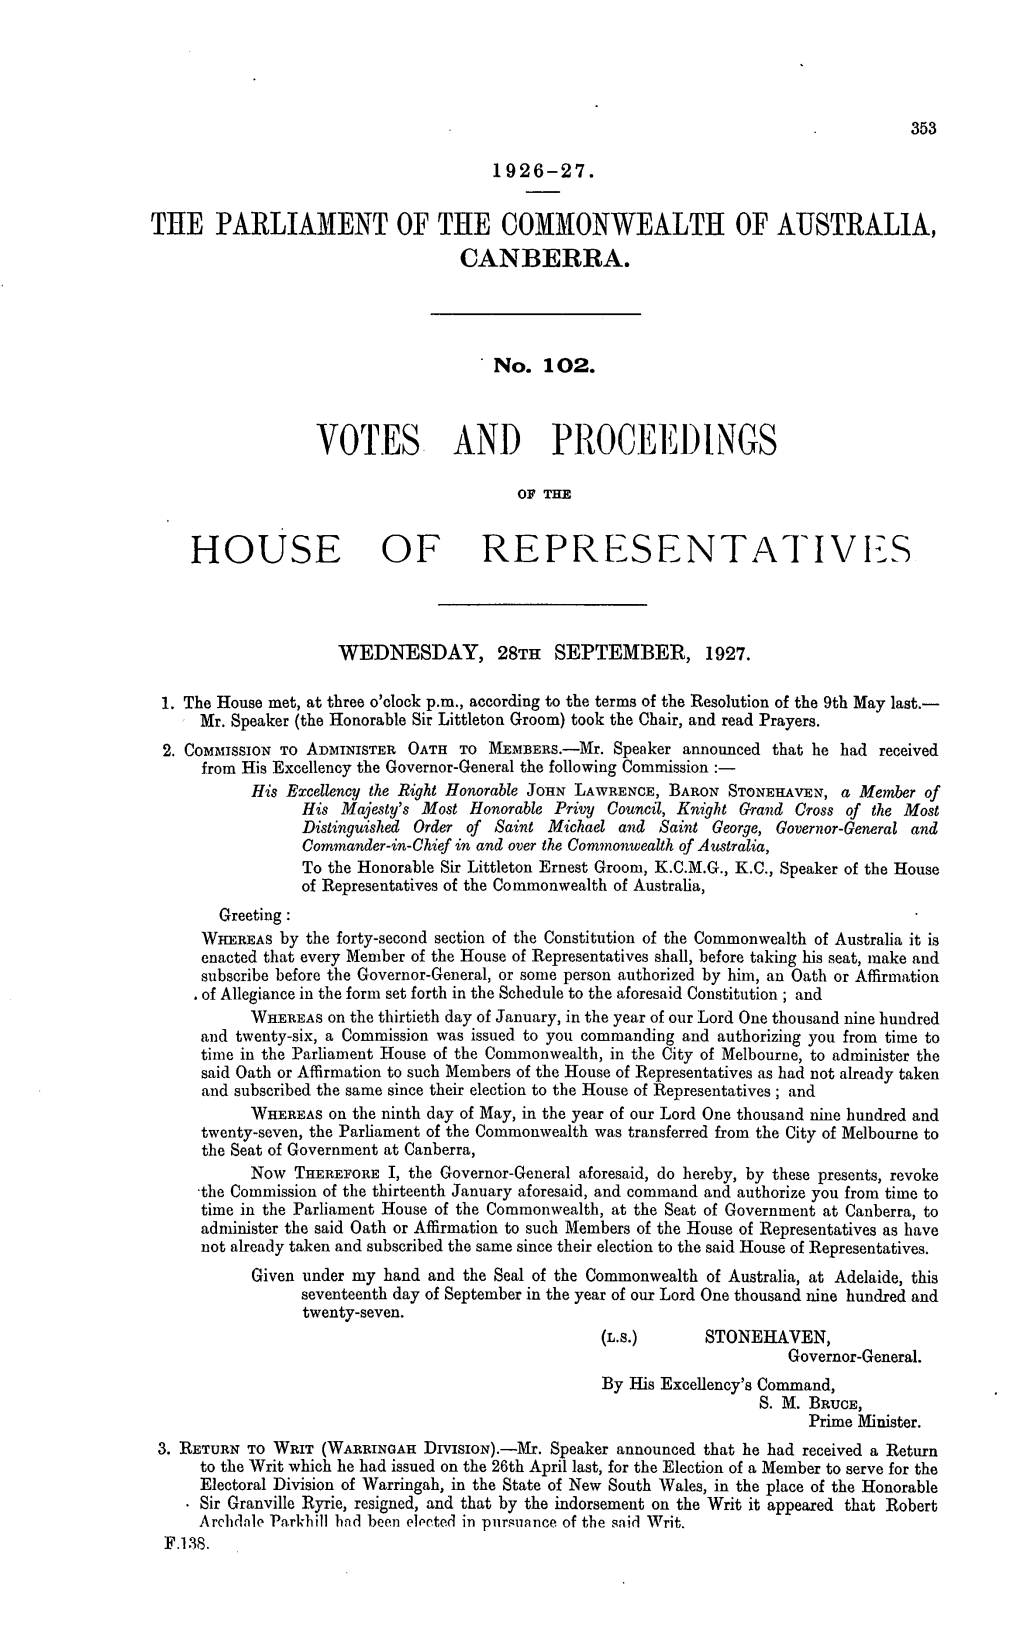 Votes and Proceedings House of Representativei:S